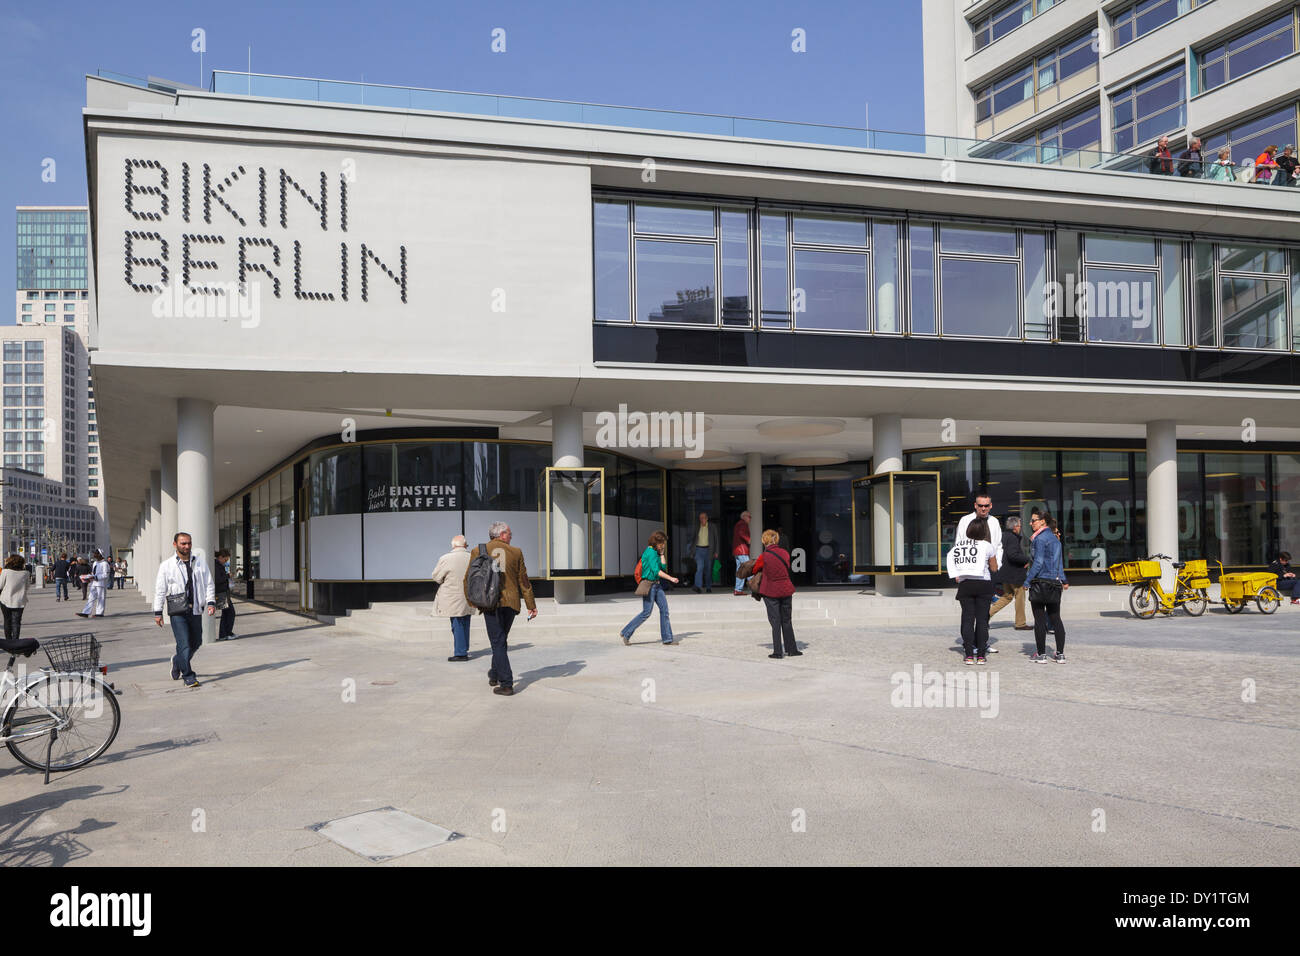 Bikini Berlin Shopping Centre, Berlin, Germany Stock Photo